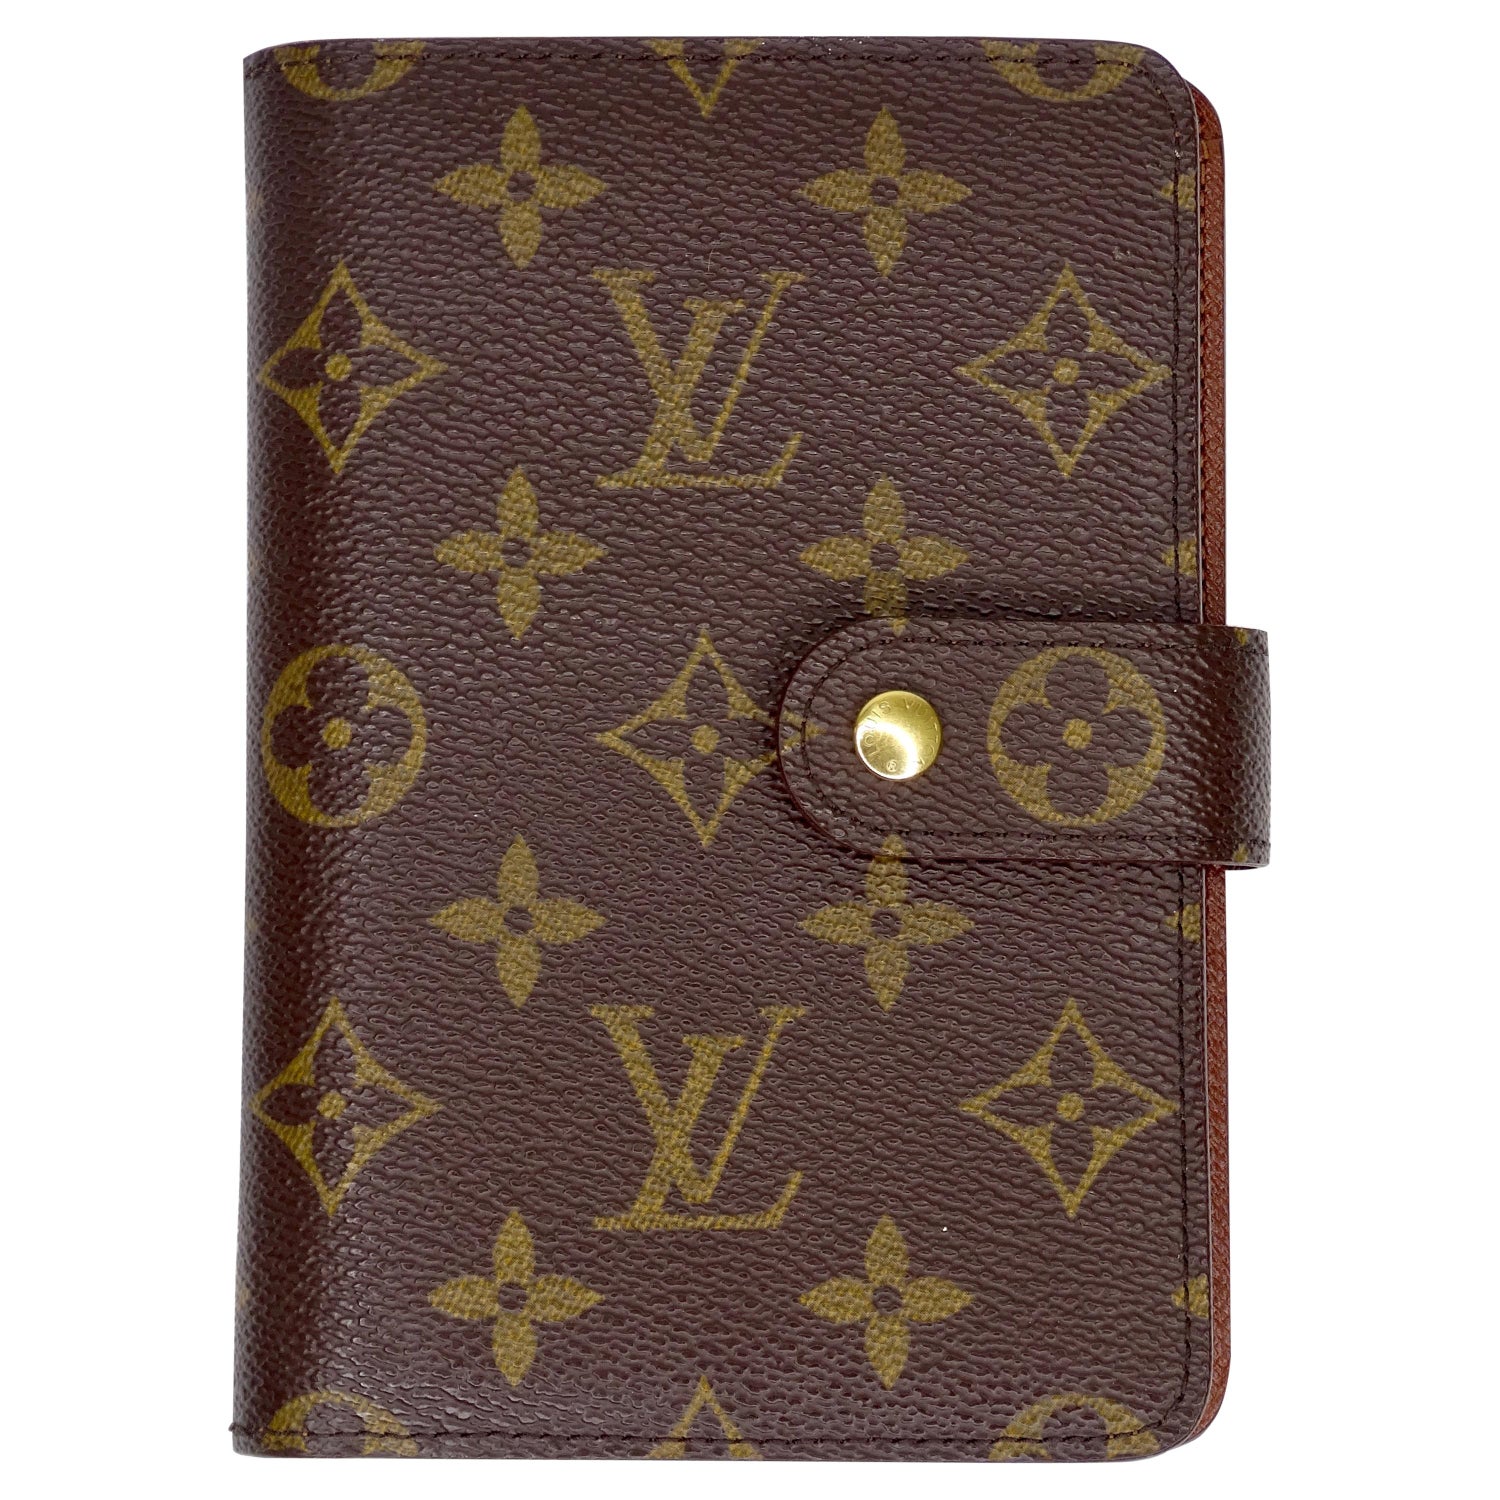 Louis Vuitton - Authenticated Passport Cover Purse - Cotton Multicolour for Women, Very Good Condition